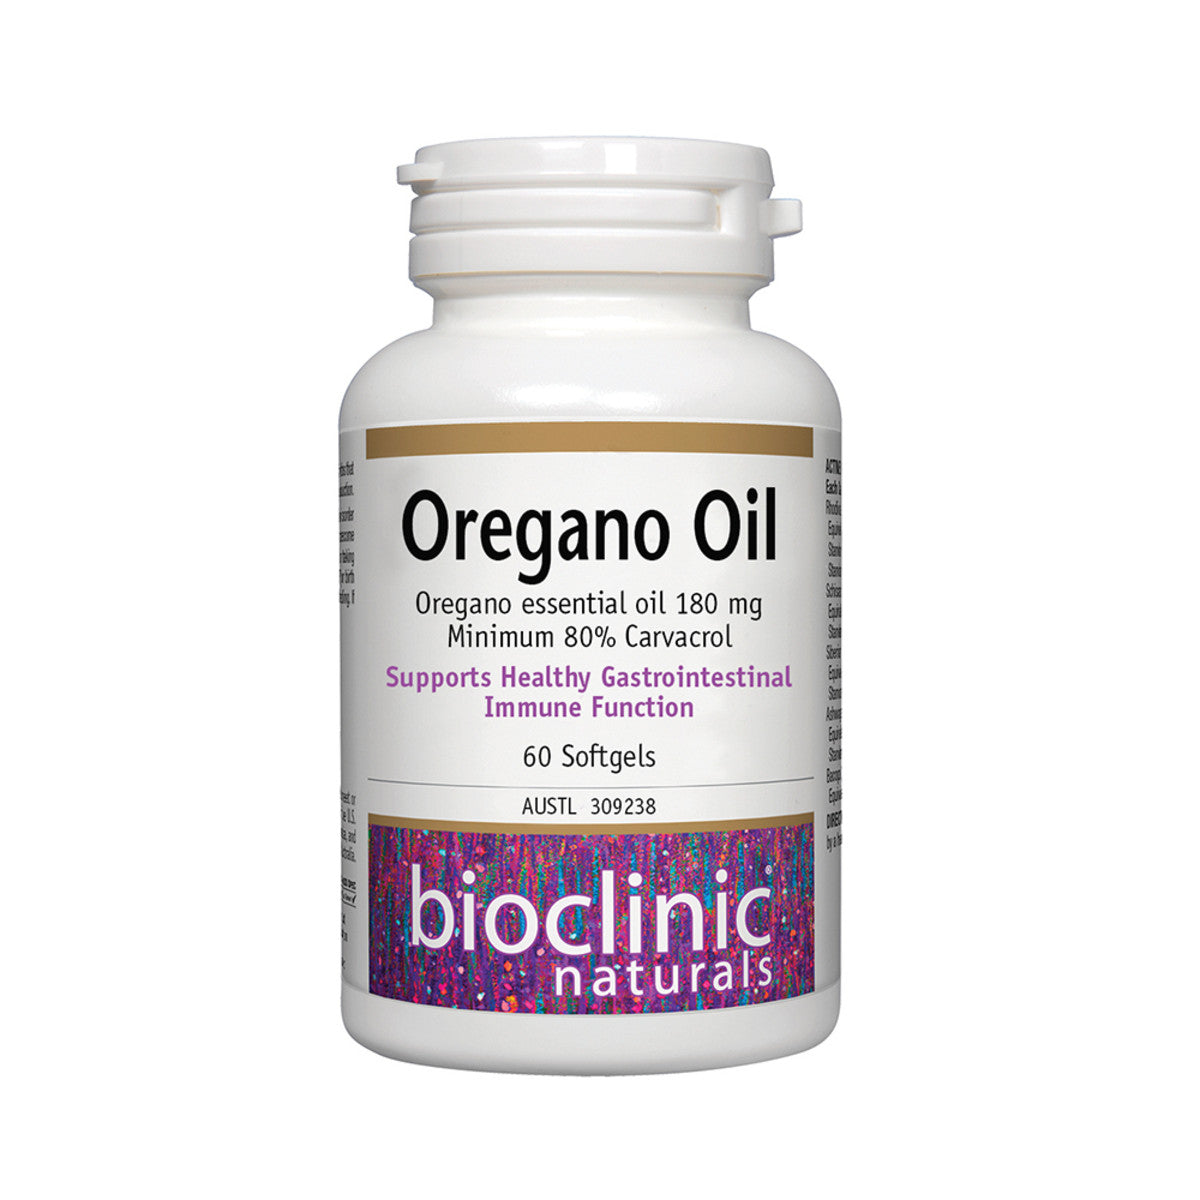 Bioclinic Naturals - Oregano Oil